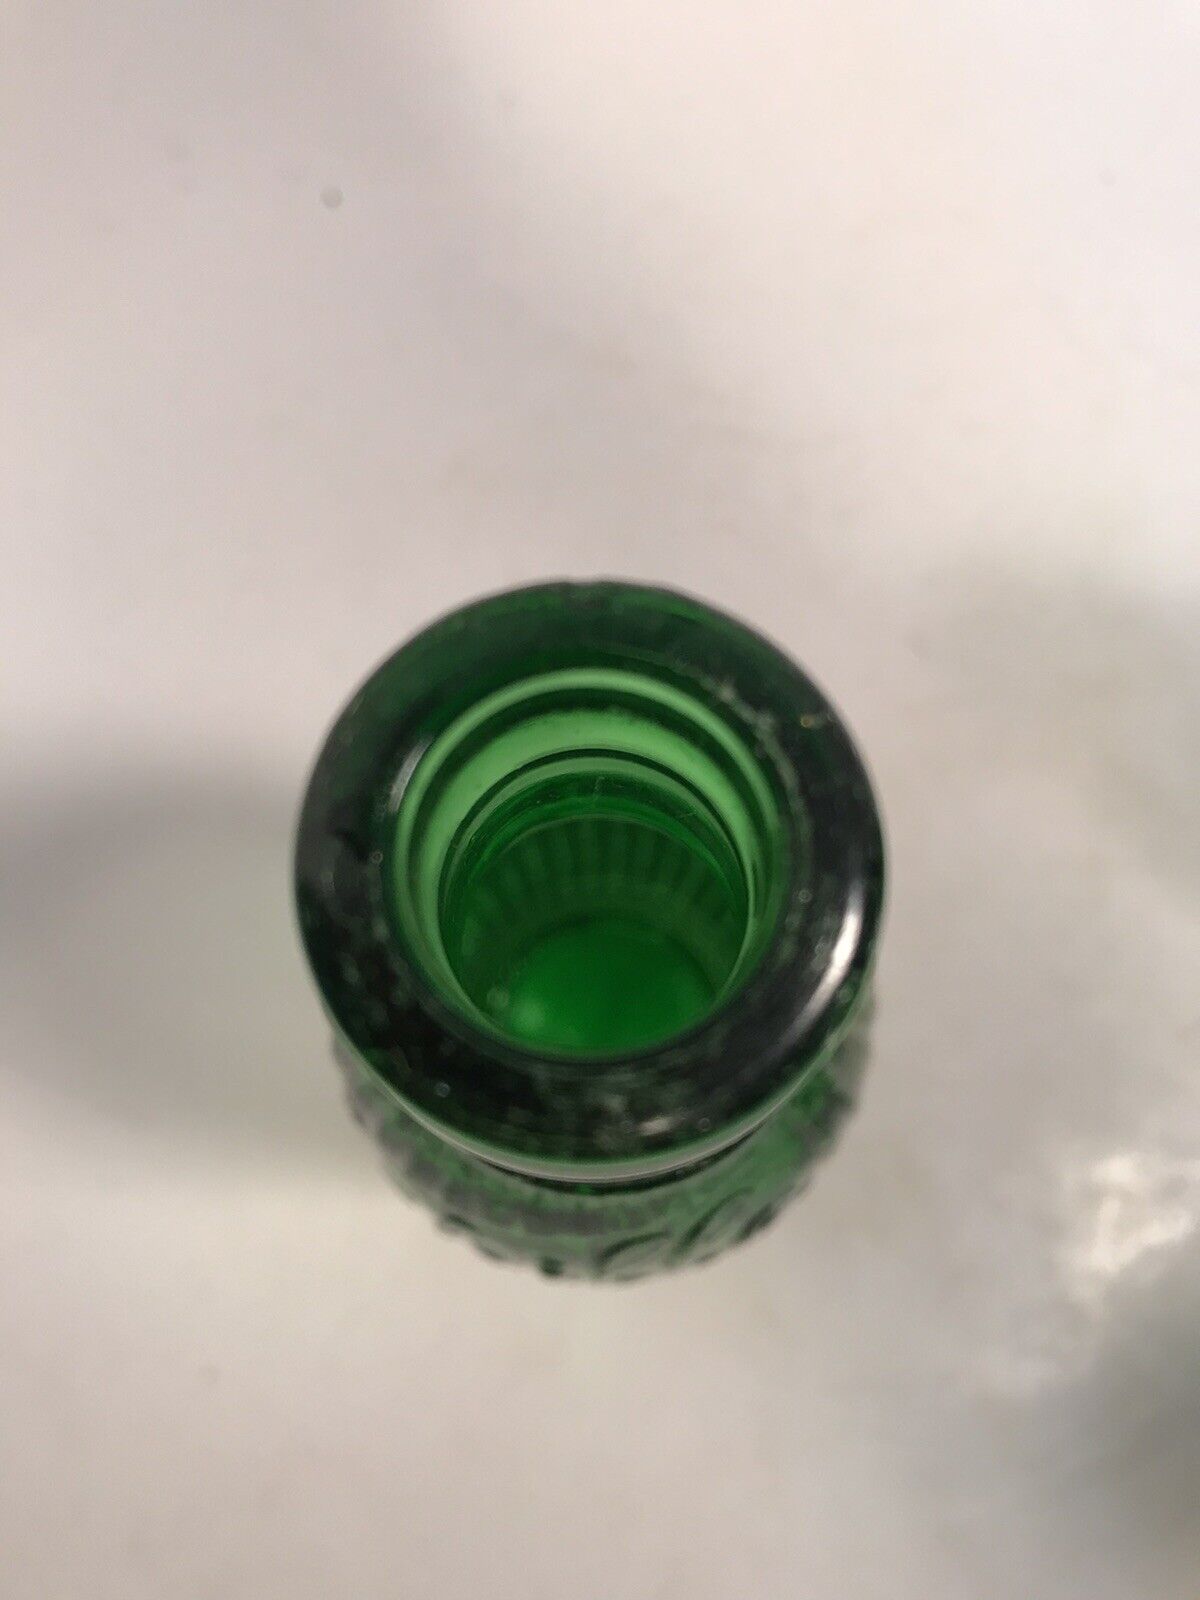 SCHILLE green Soda Bottles, Pop, Beverage, lot of 3 the same, dug, 7 ounce Без бренда - фотография #6